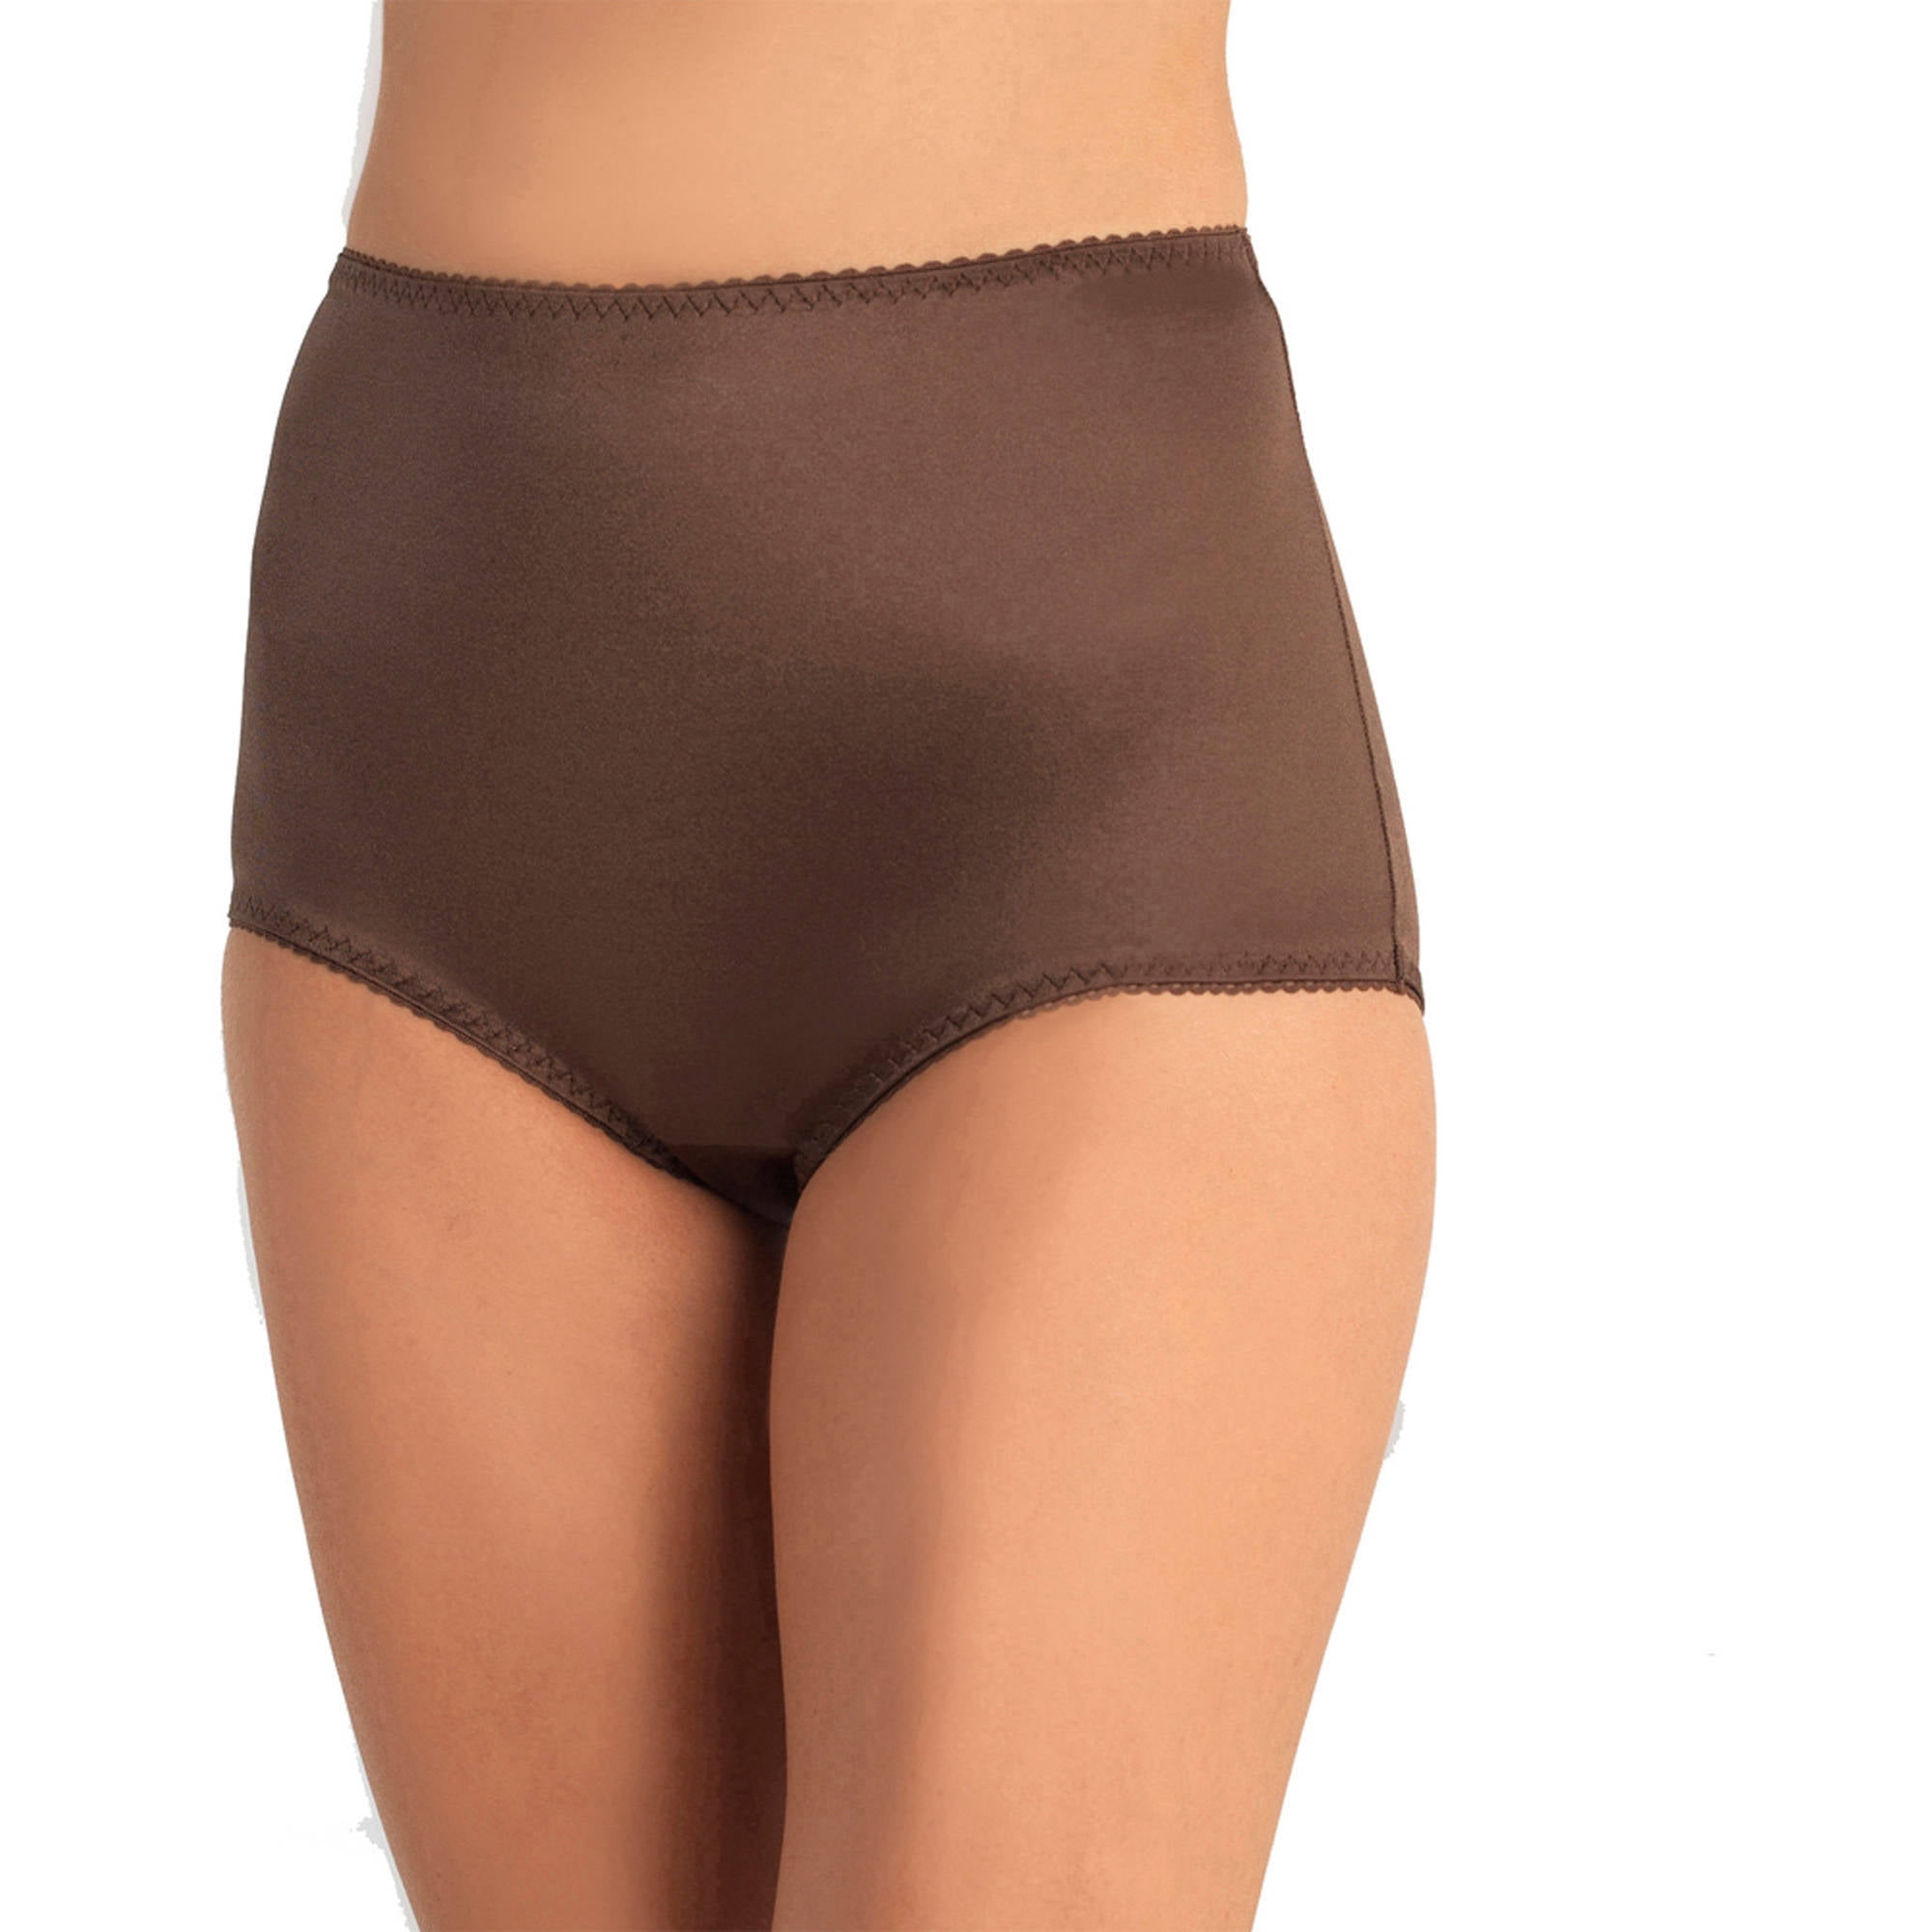 Panties : Intimates & Sleepwear - Walmart.com - Walmart.com